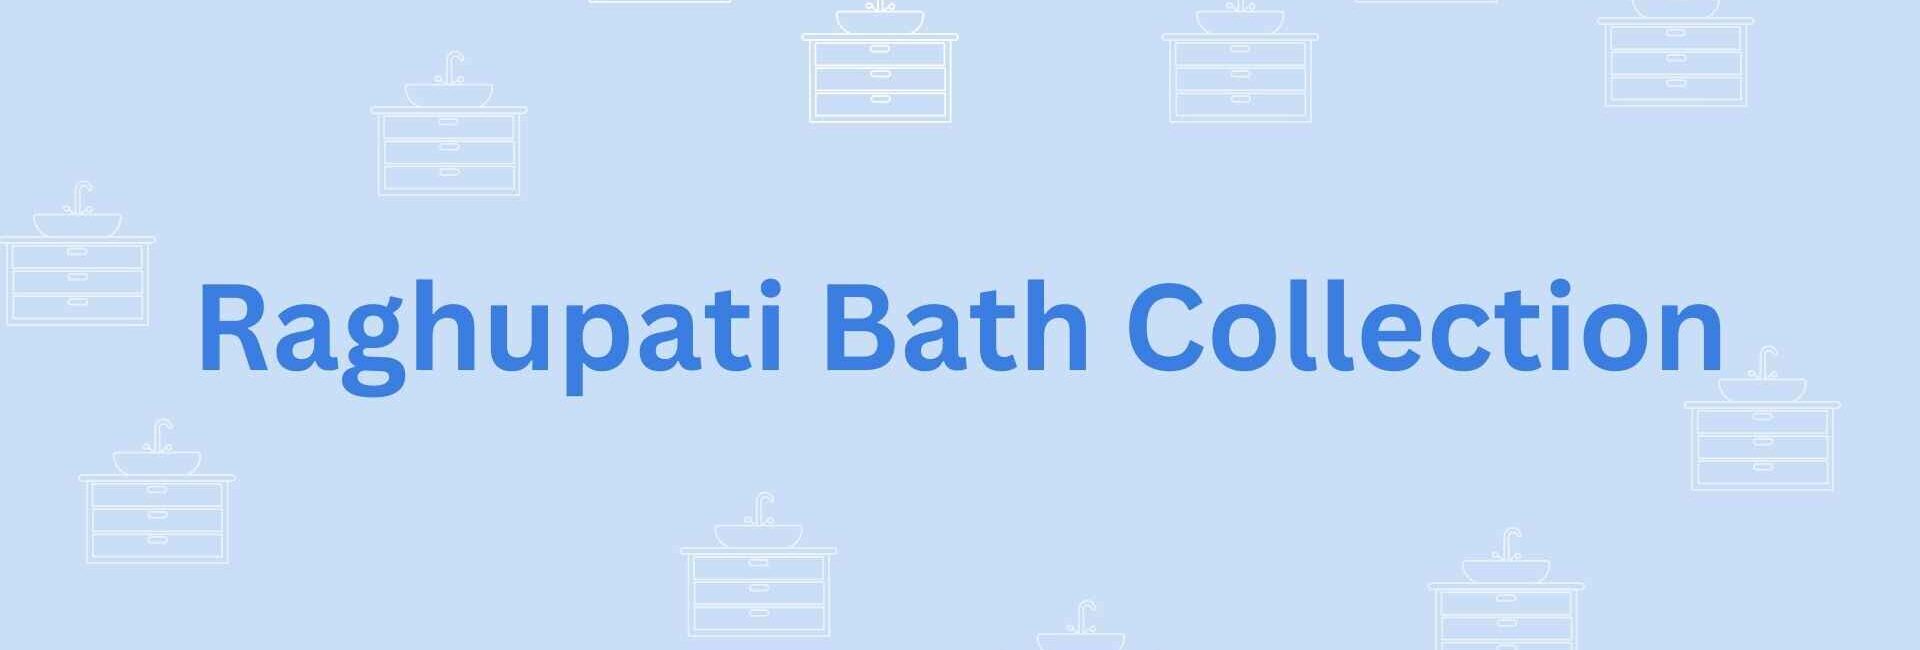 Raghupati Bath Collection- Sanitary needs in Noida